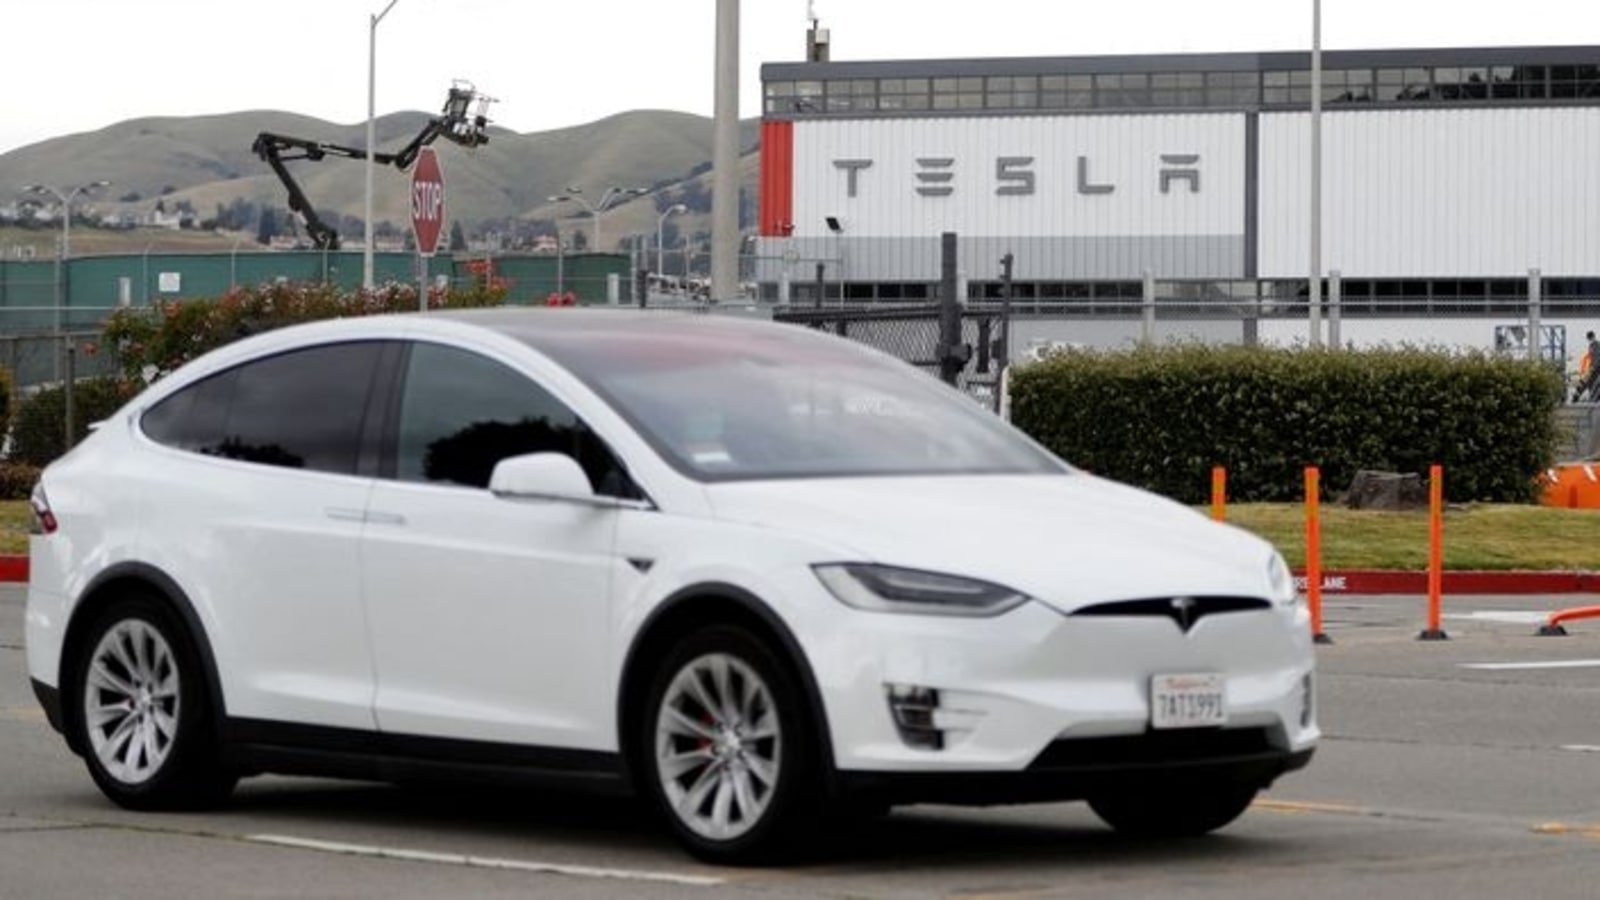 Big blow for Elon Musk? 25 Tesla cars HACKED, claims teenager; tweet goes viral Tech News